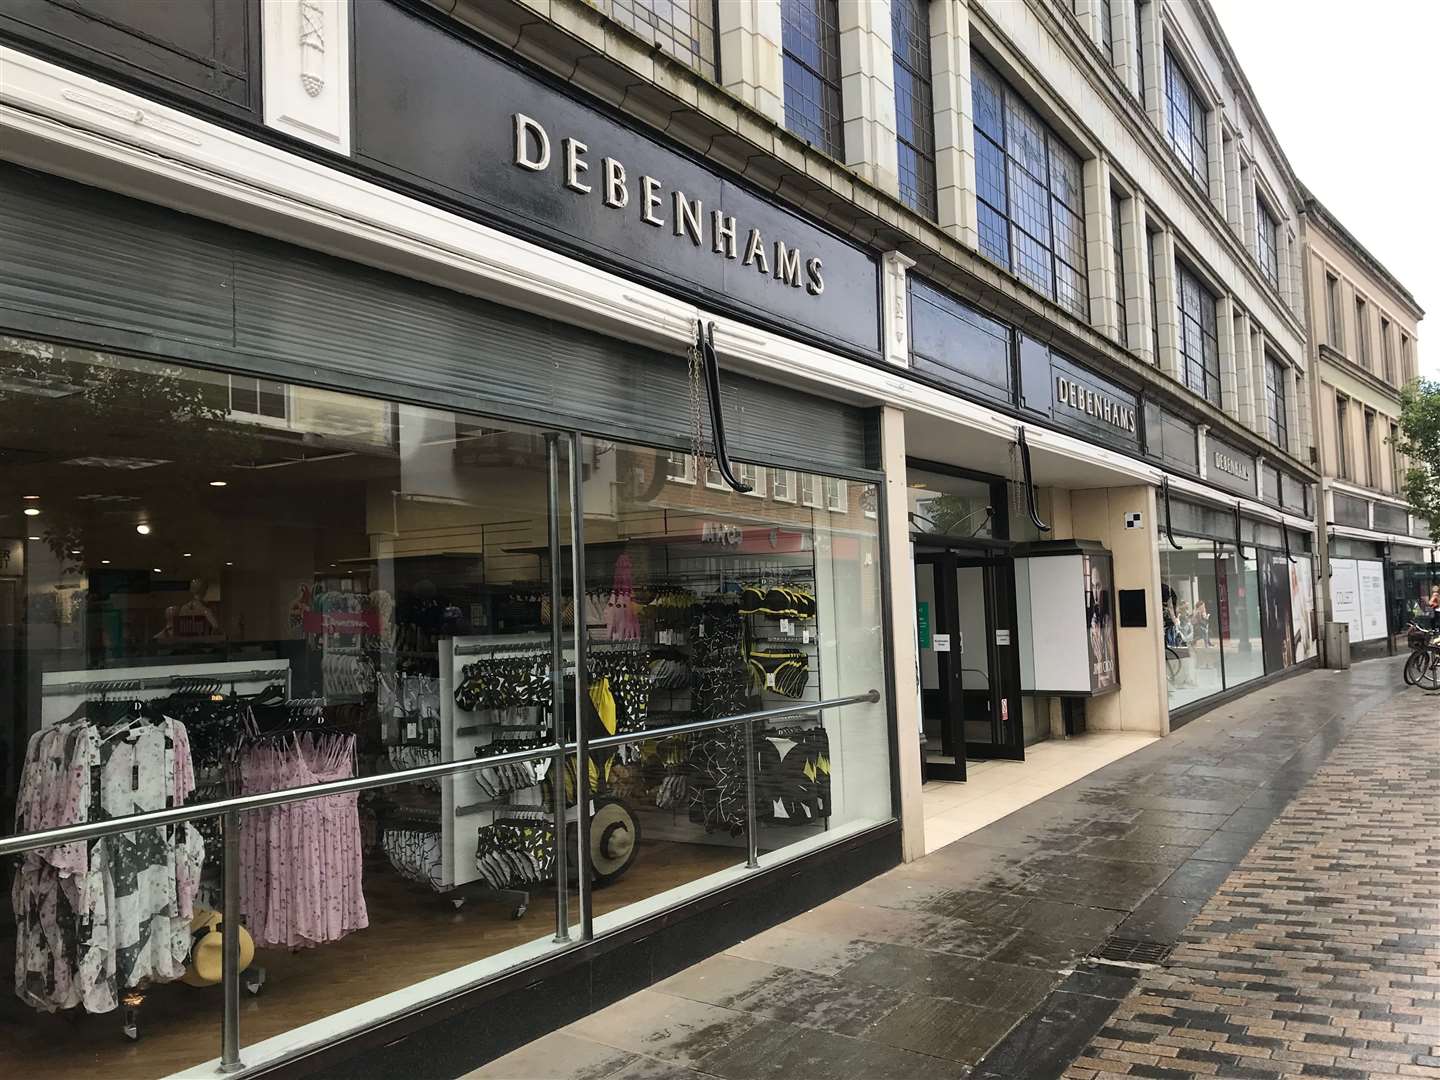 Regeneration plans are afoot for Debenhams in Canterbury